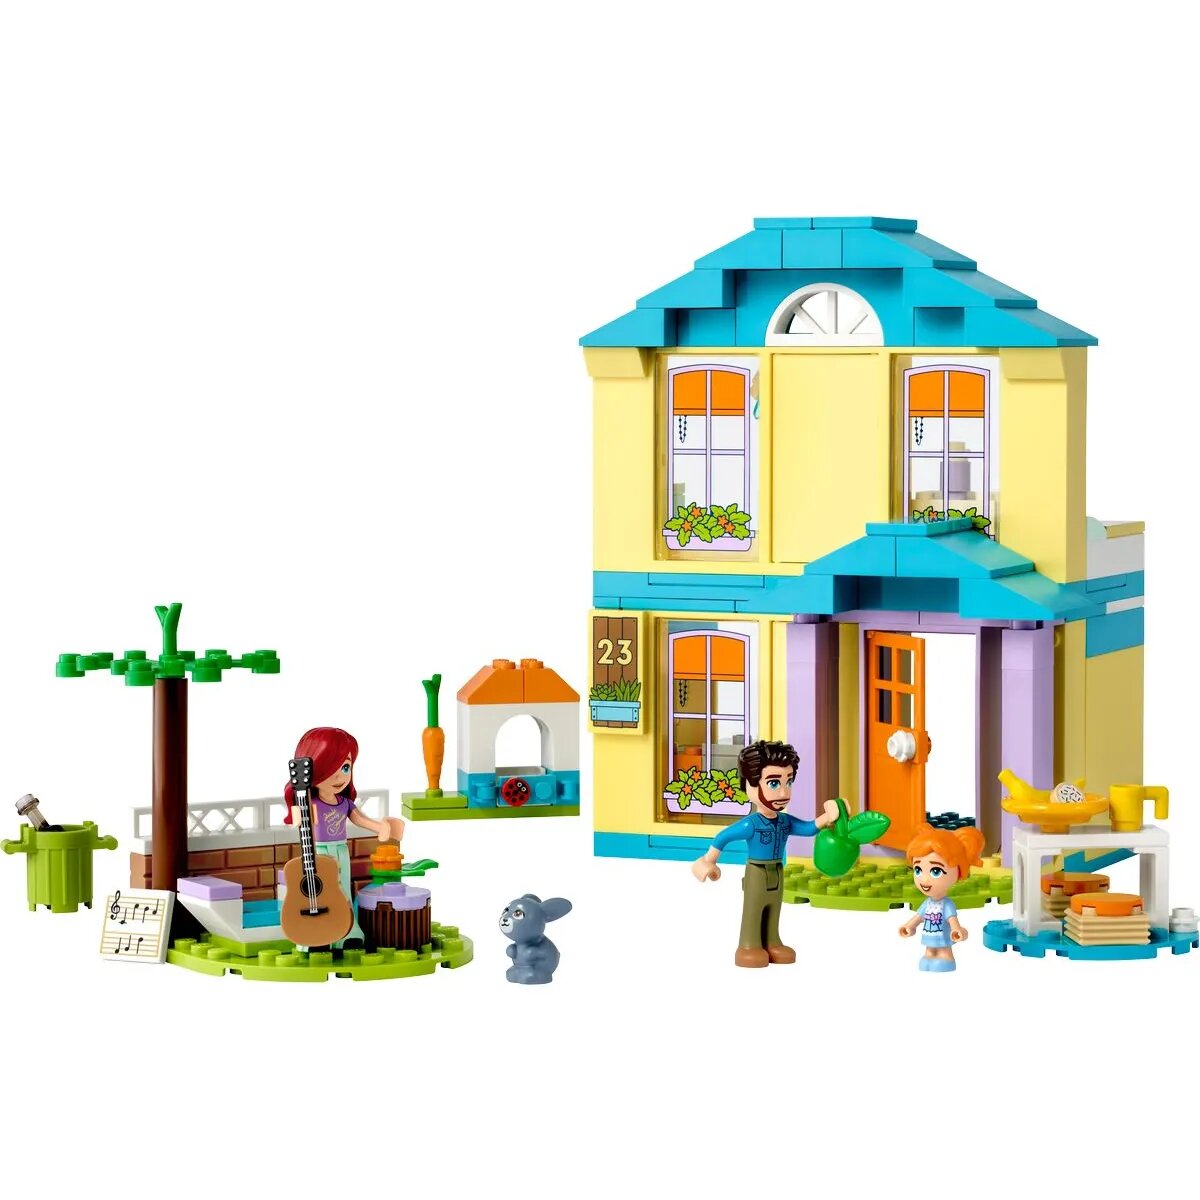 LEGO® Friends 41724 Paisley's House